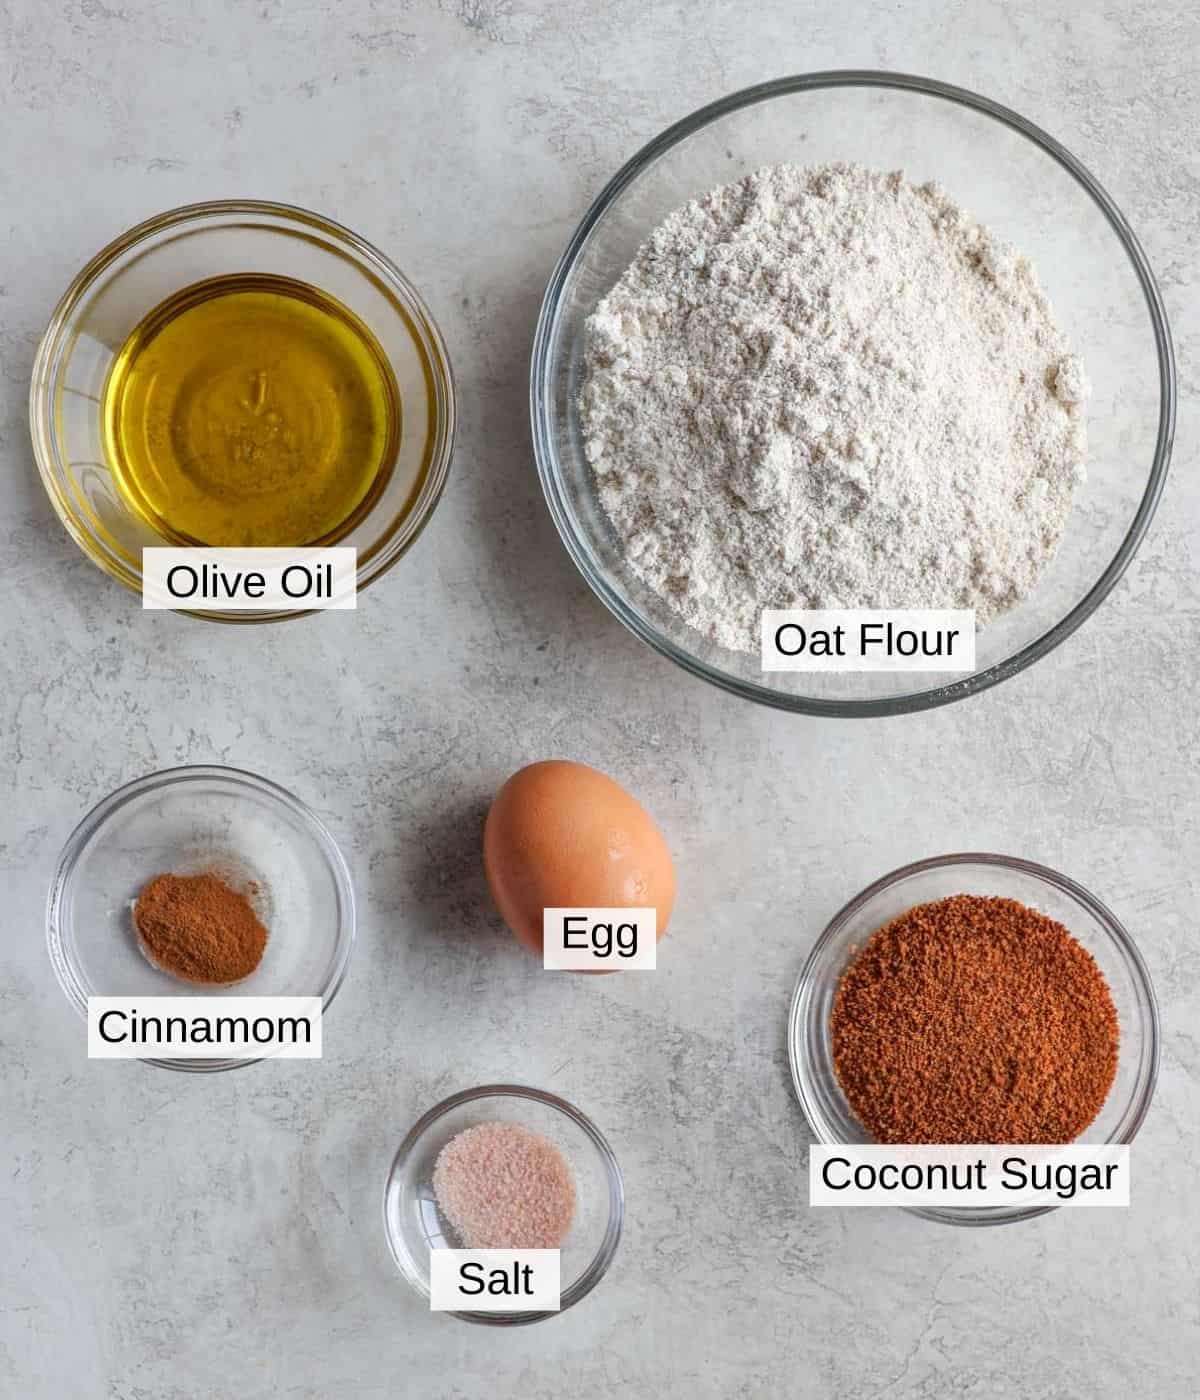 Ingredients for Oat Flour Pie Crust